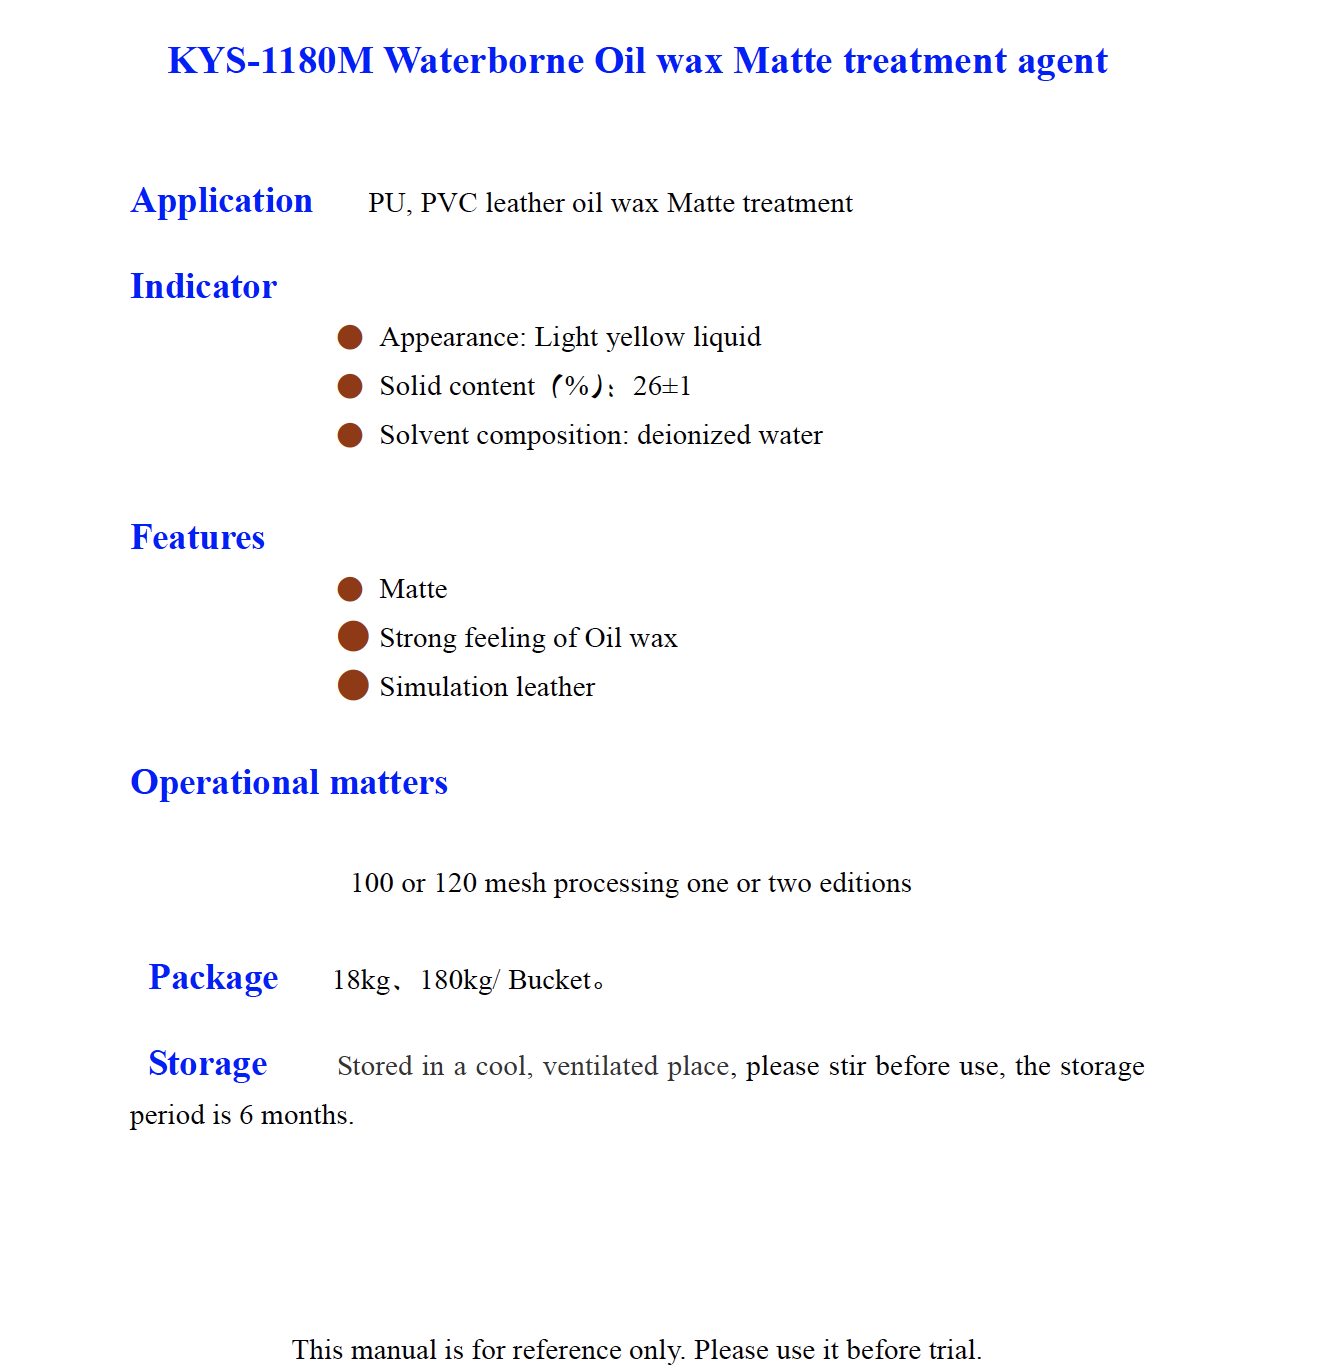 KYS 1180M Waterborne Oil wax Matte treatment agent